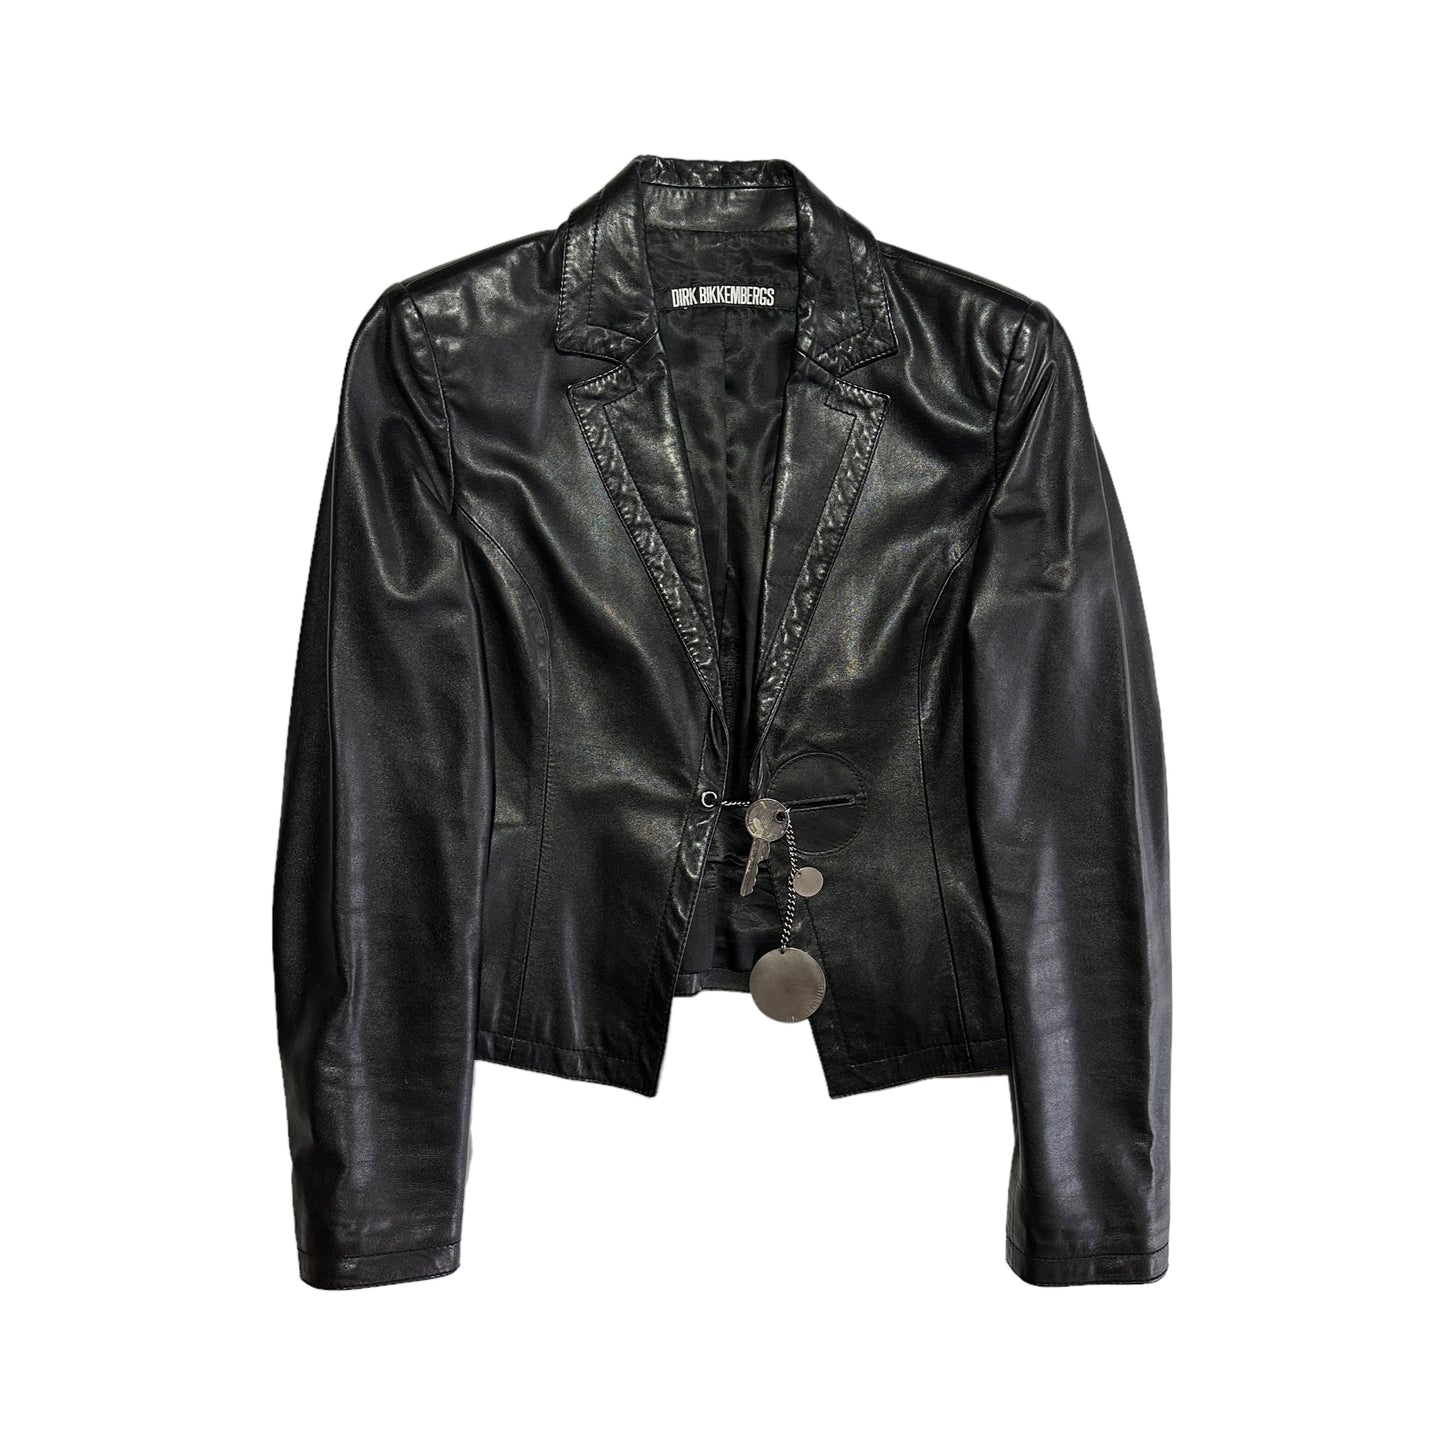 S/S 2004 Dirk Bikkembergs
Leather Jacket (42)